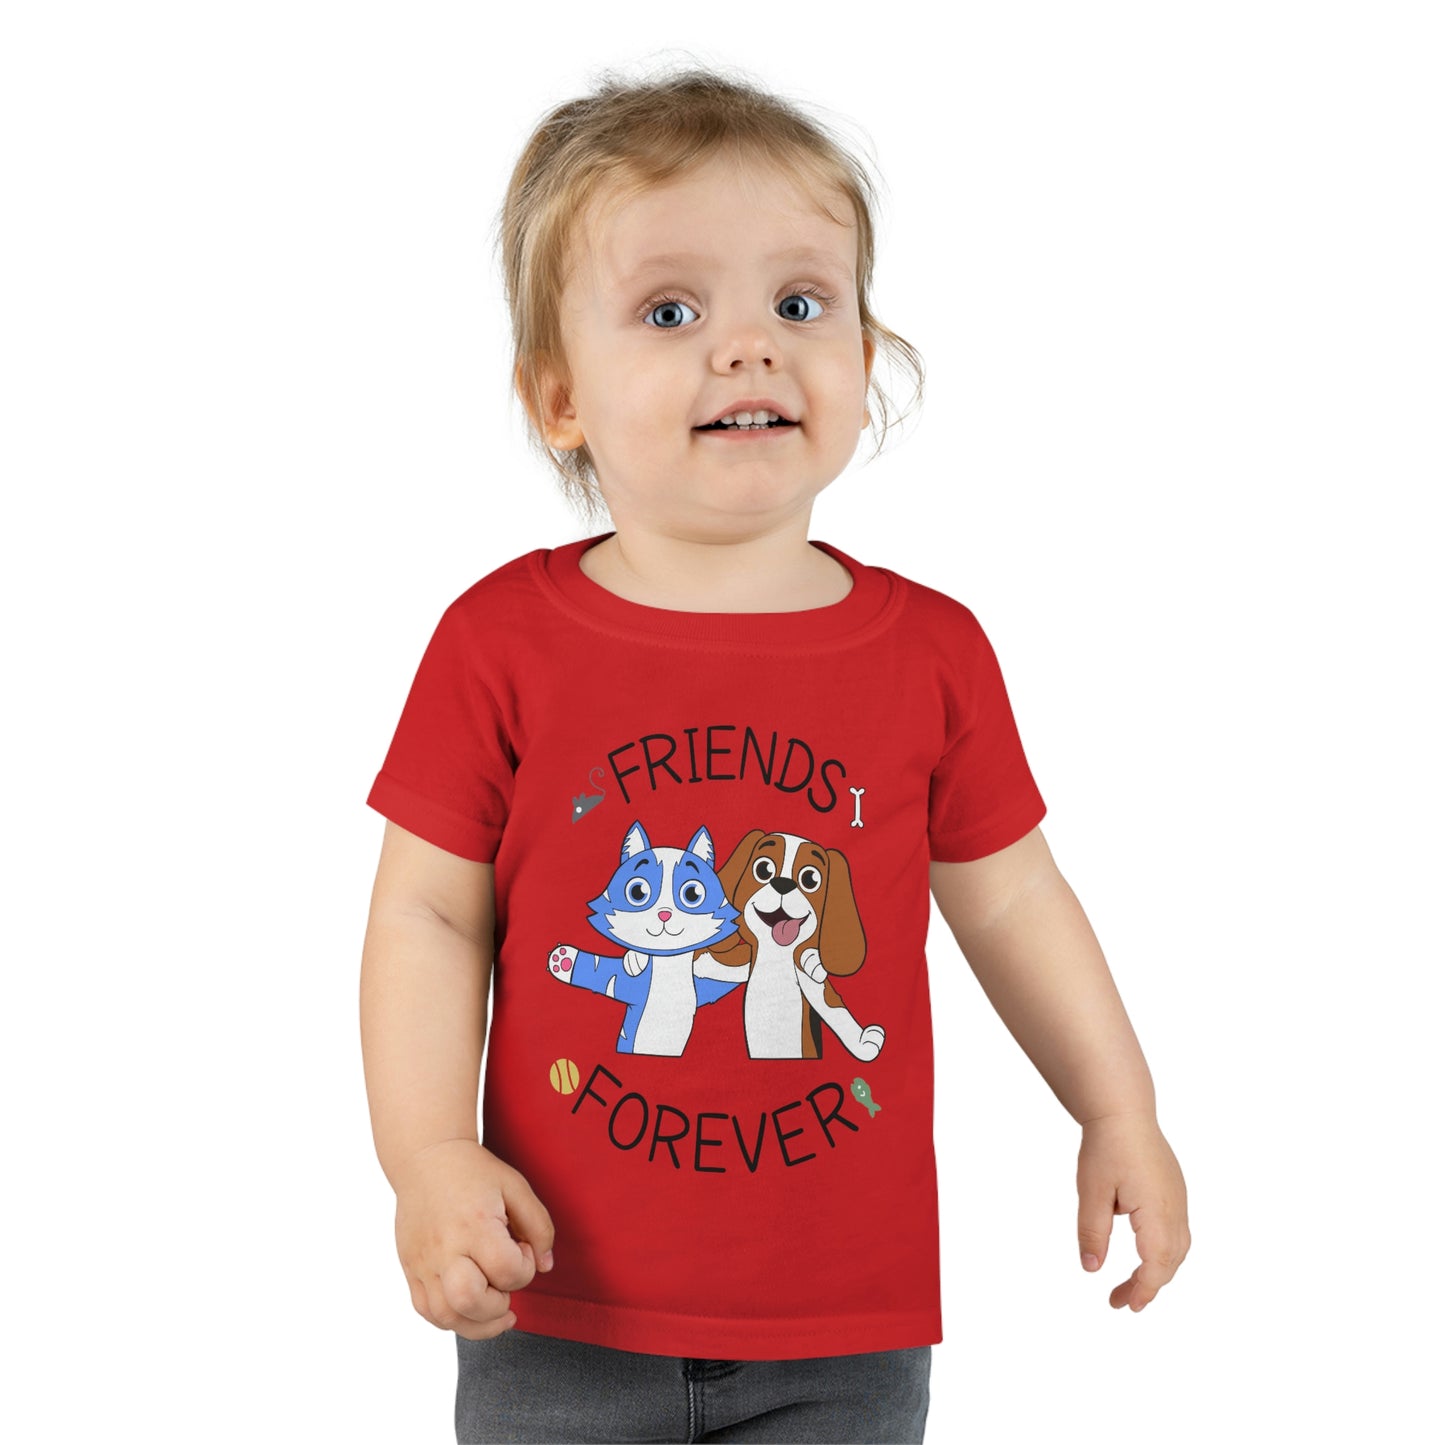 Friends Forever Toddler T-shirt